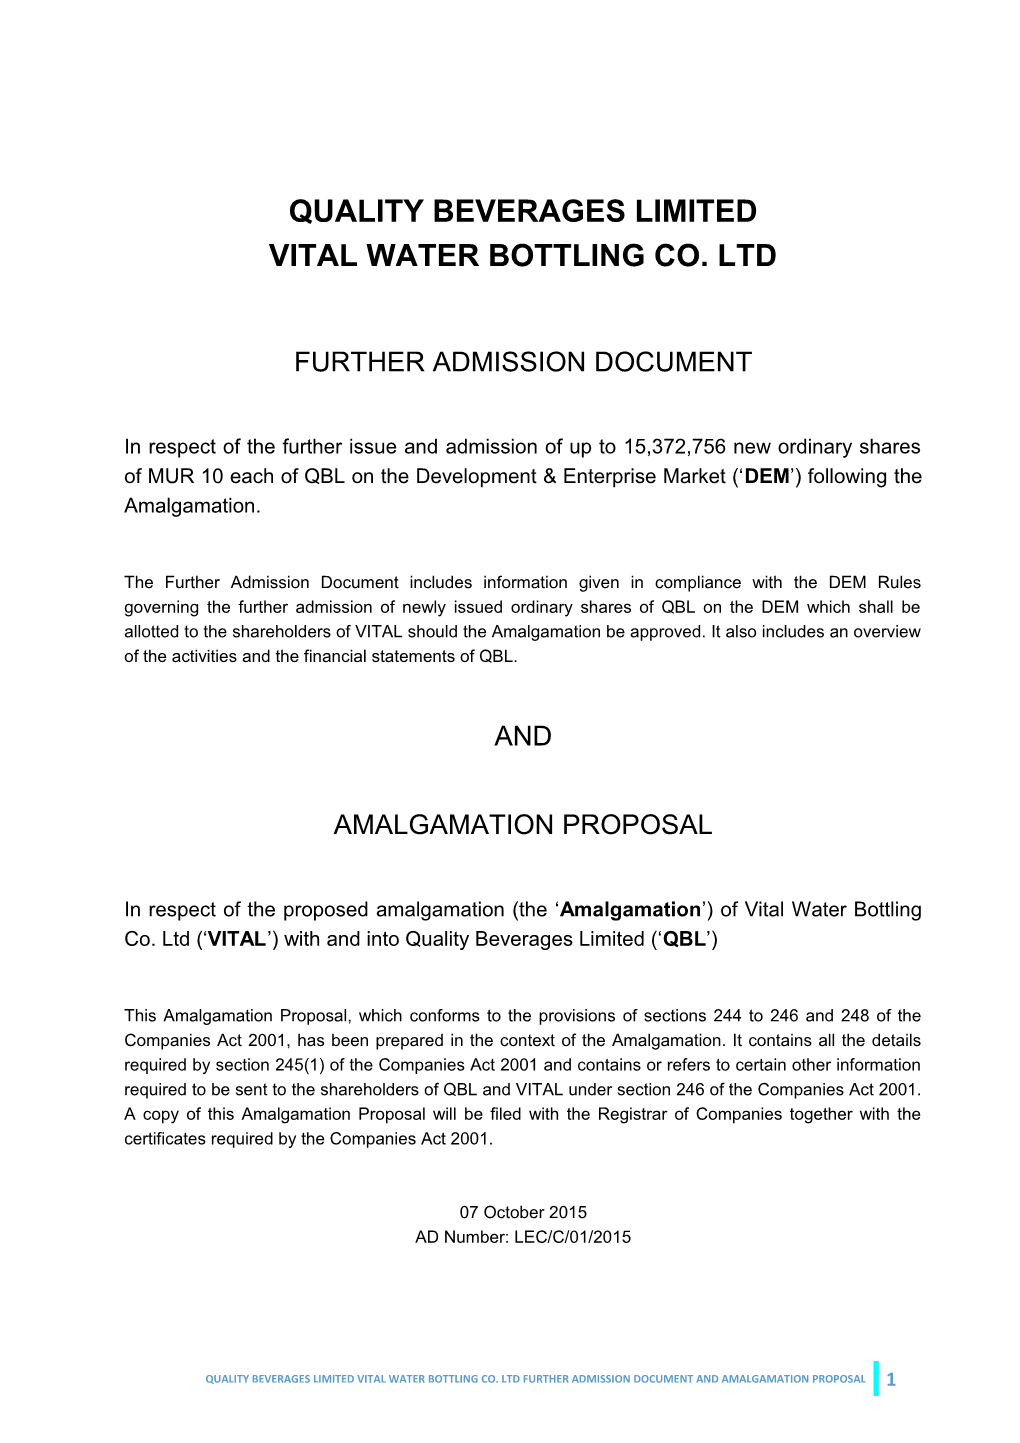 Quality Beverages Limited Vital Water Bottling Co. Ltd Amalgamation Proposal and Further